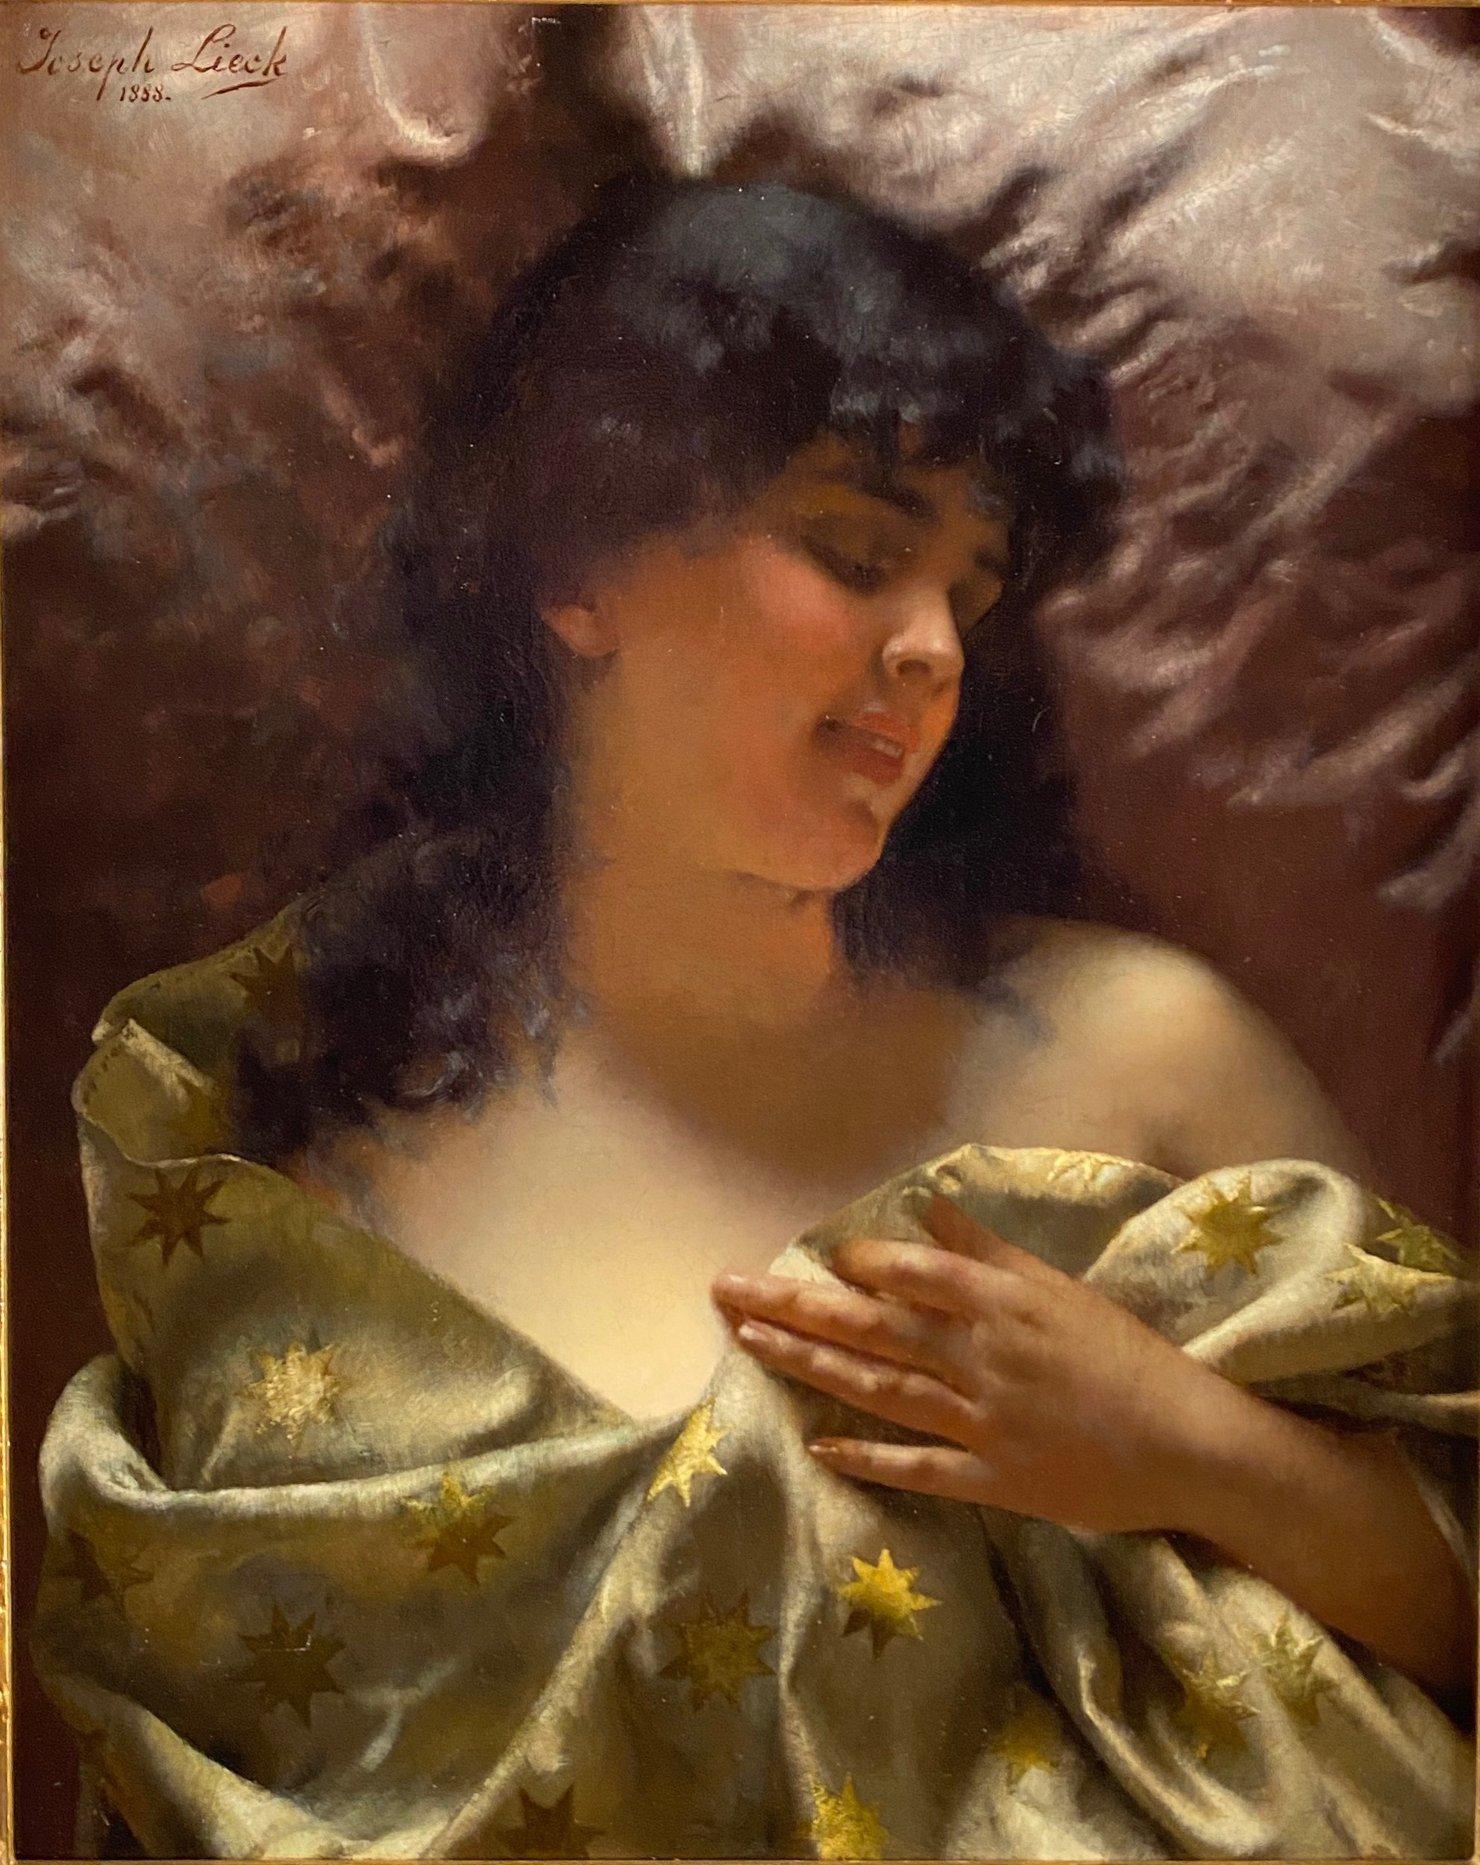 Joseph Lieck Nude Painting - SLEEPING BEAUTY (1888) BY JOSEPH LIECK